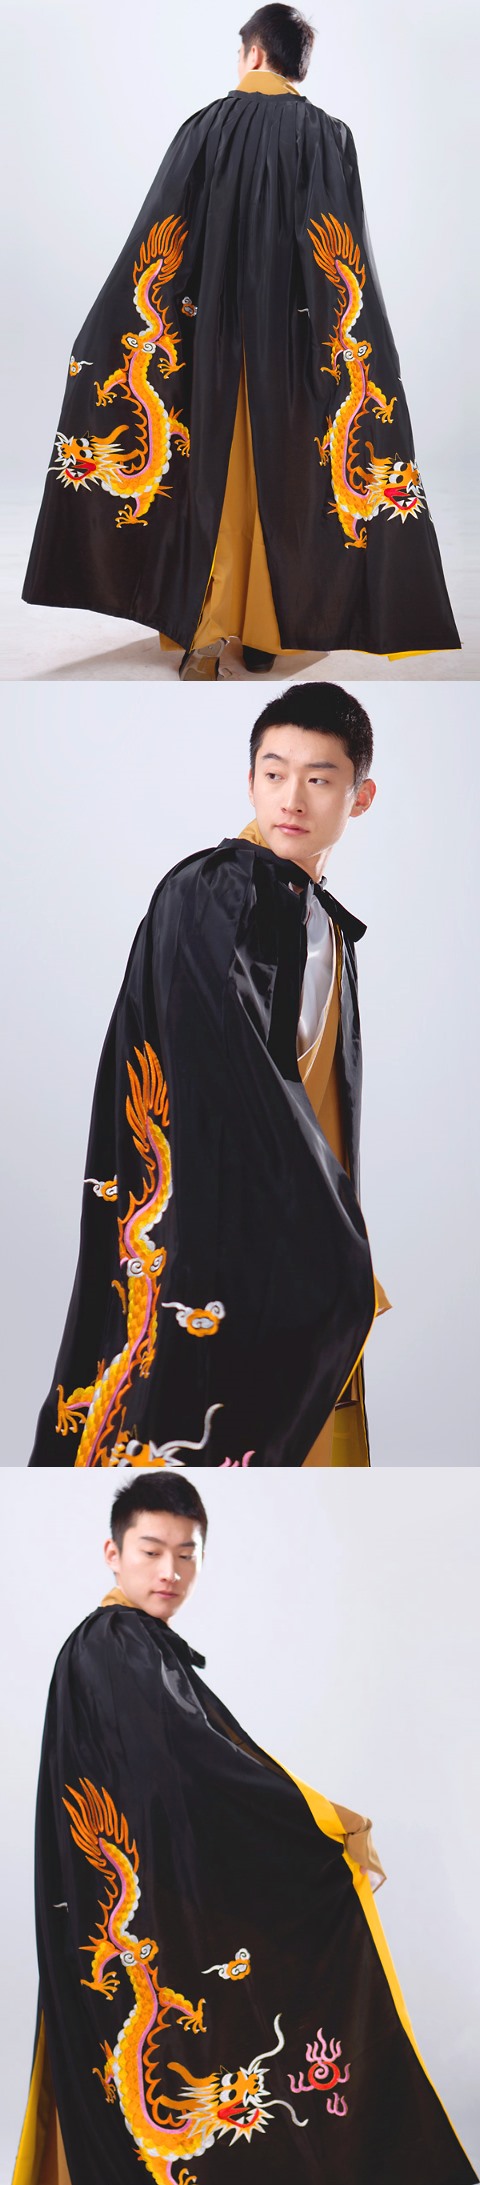 Men's Hanfu Dragon Embroidery Cloak - Black (RM)